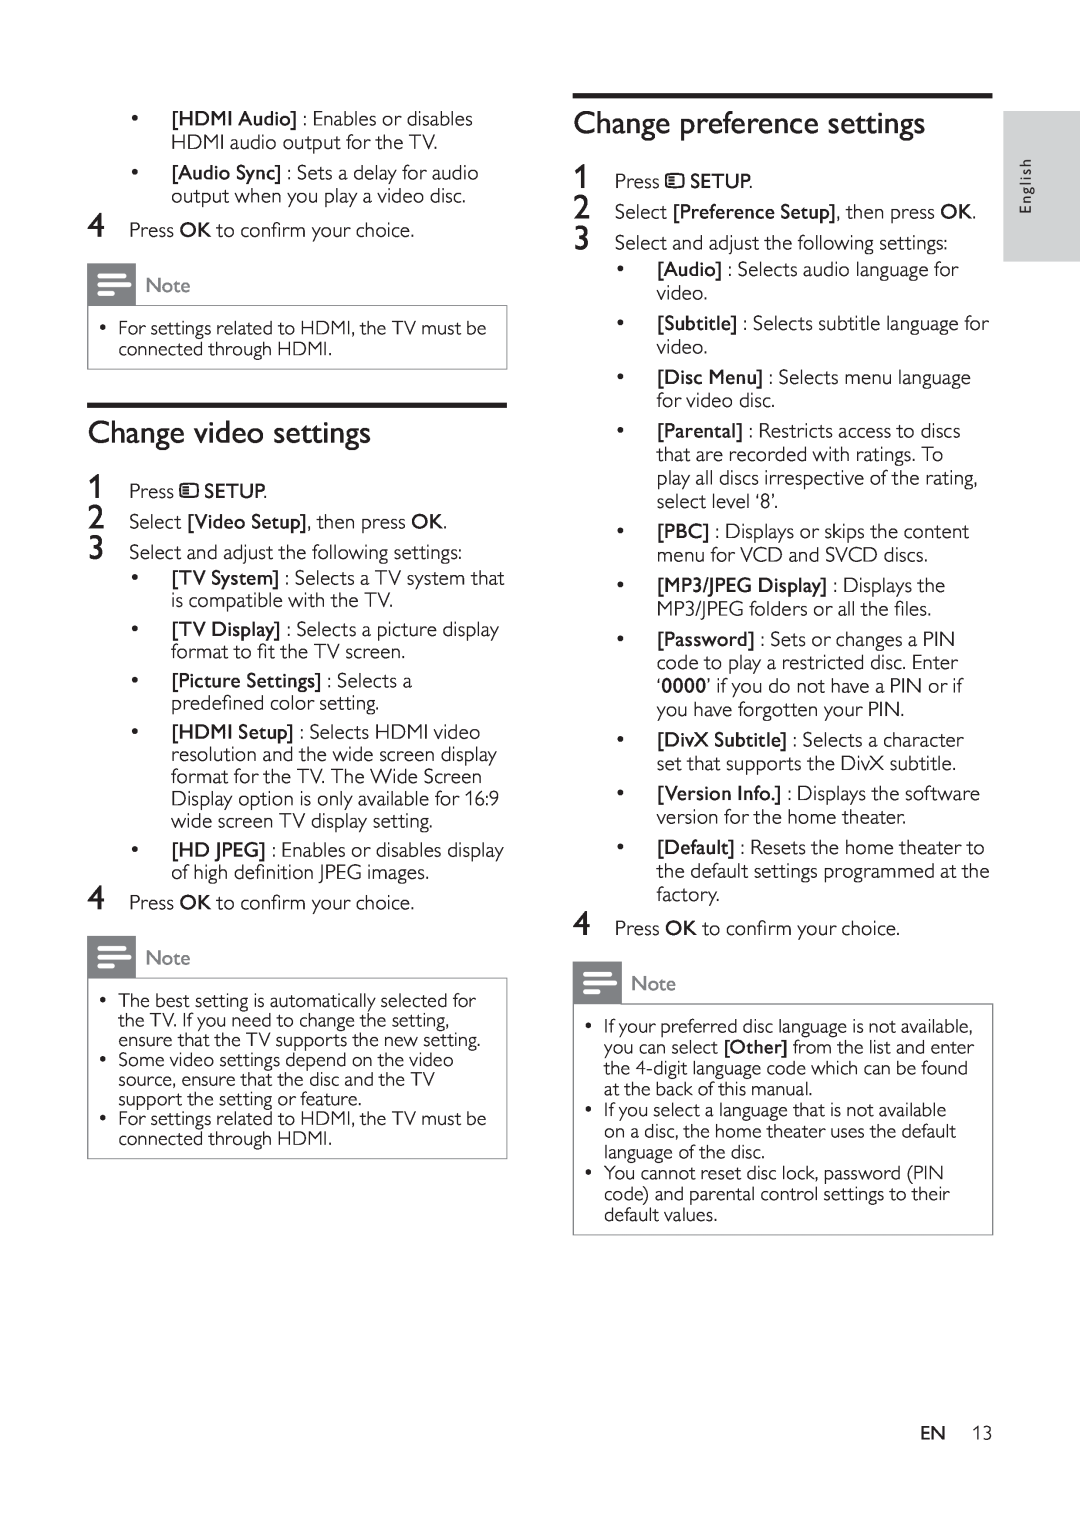 Philips HTS3520, HTS3510 manual Change video settings, Change preference settings 